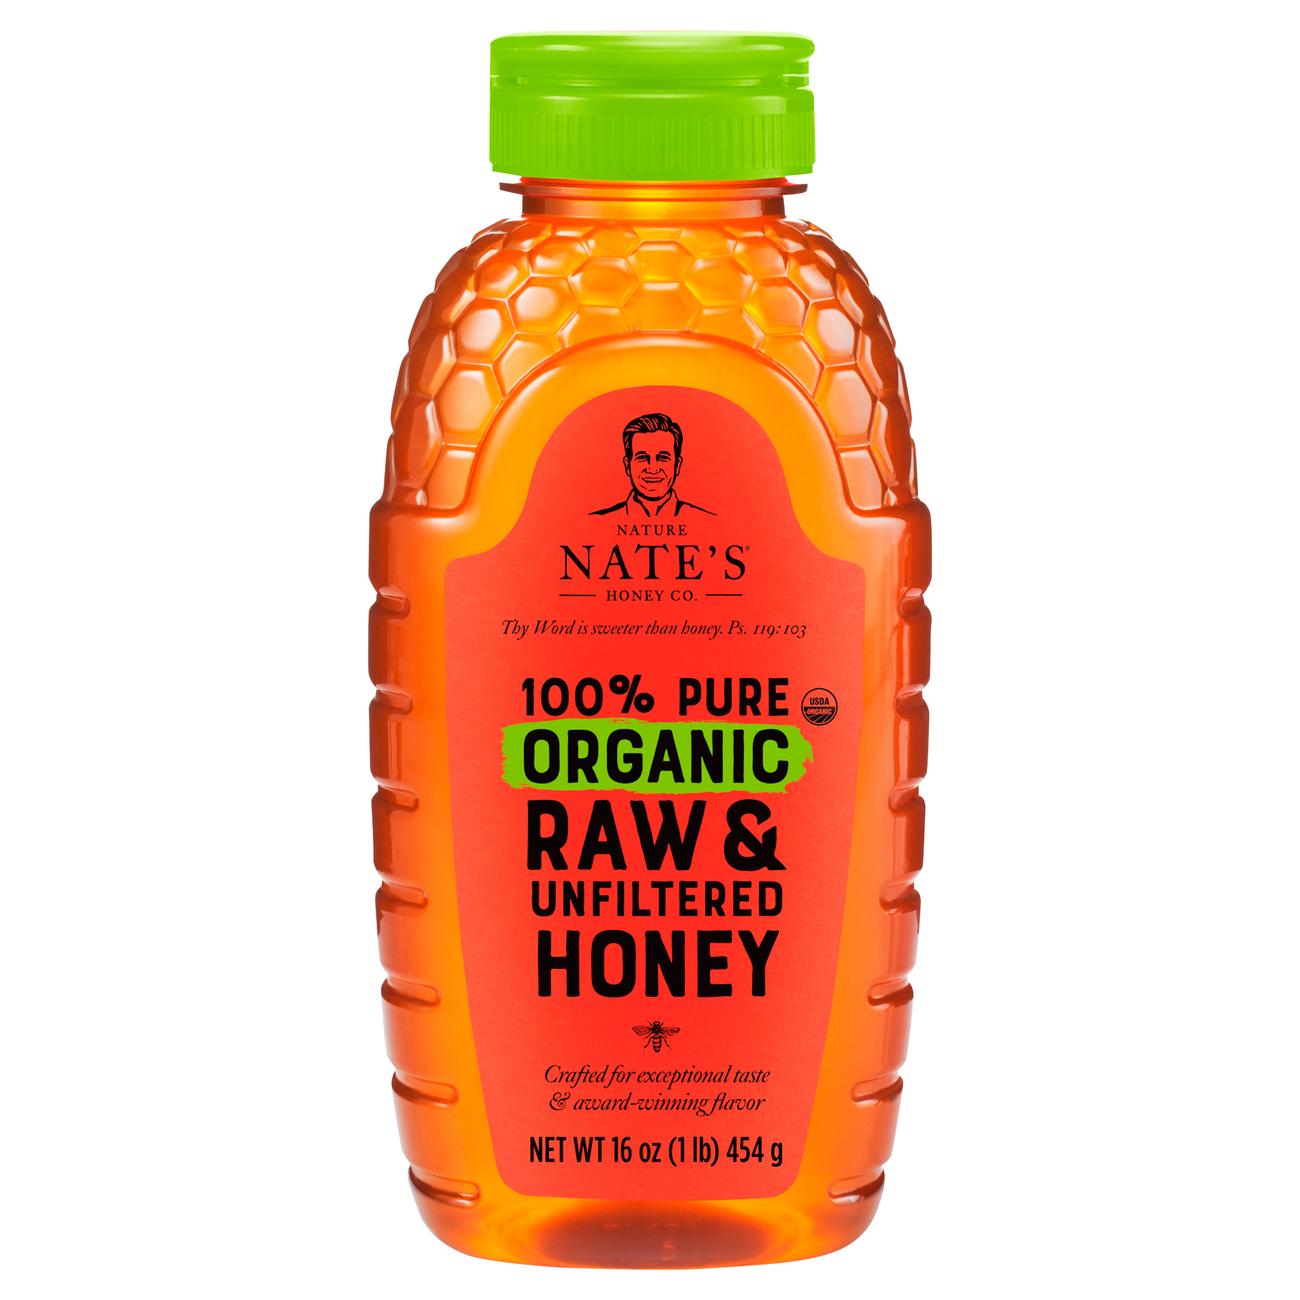 Nature Nate's Raw & Unfiltered Organic Honey; image 1 of 2